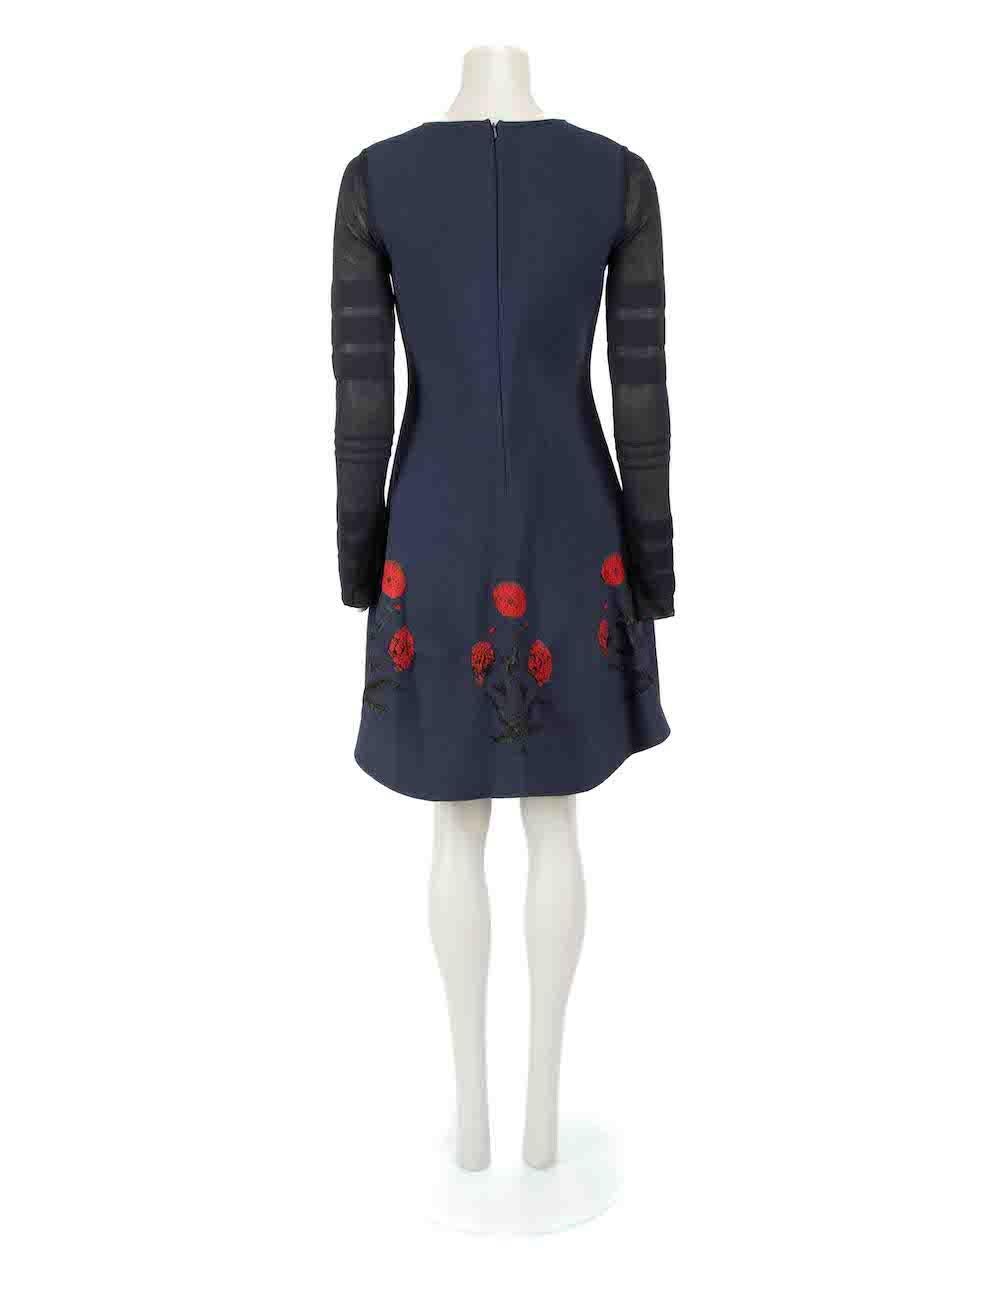 Oscar de la Renta Navy Stretch-Knit Poppy Accent Dress Size L In New Condition For Sale In London, GB